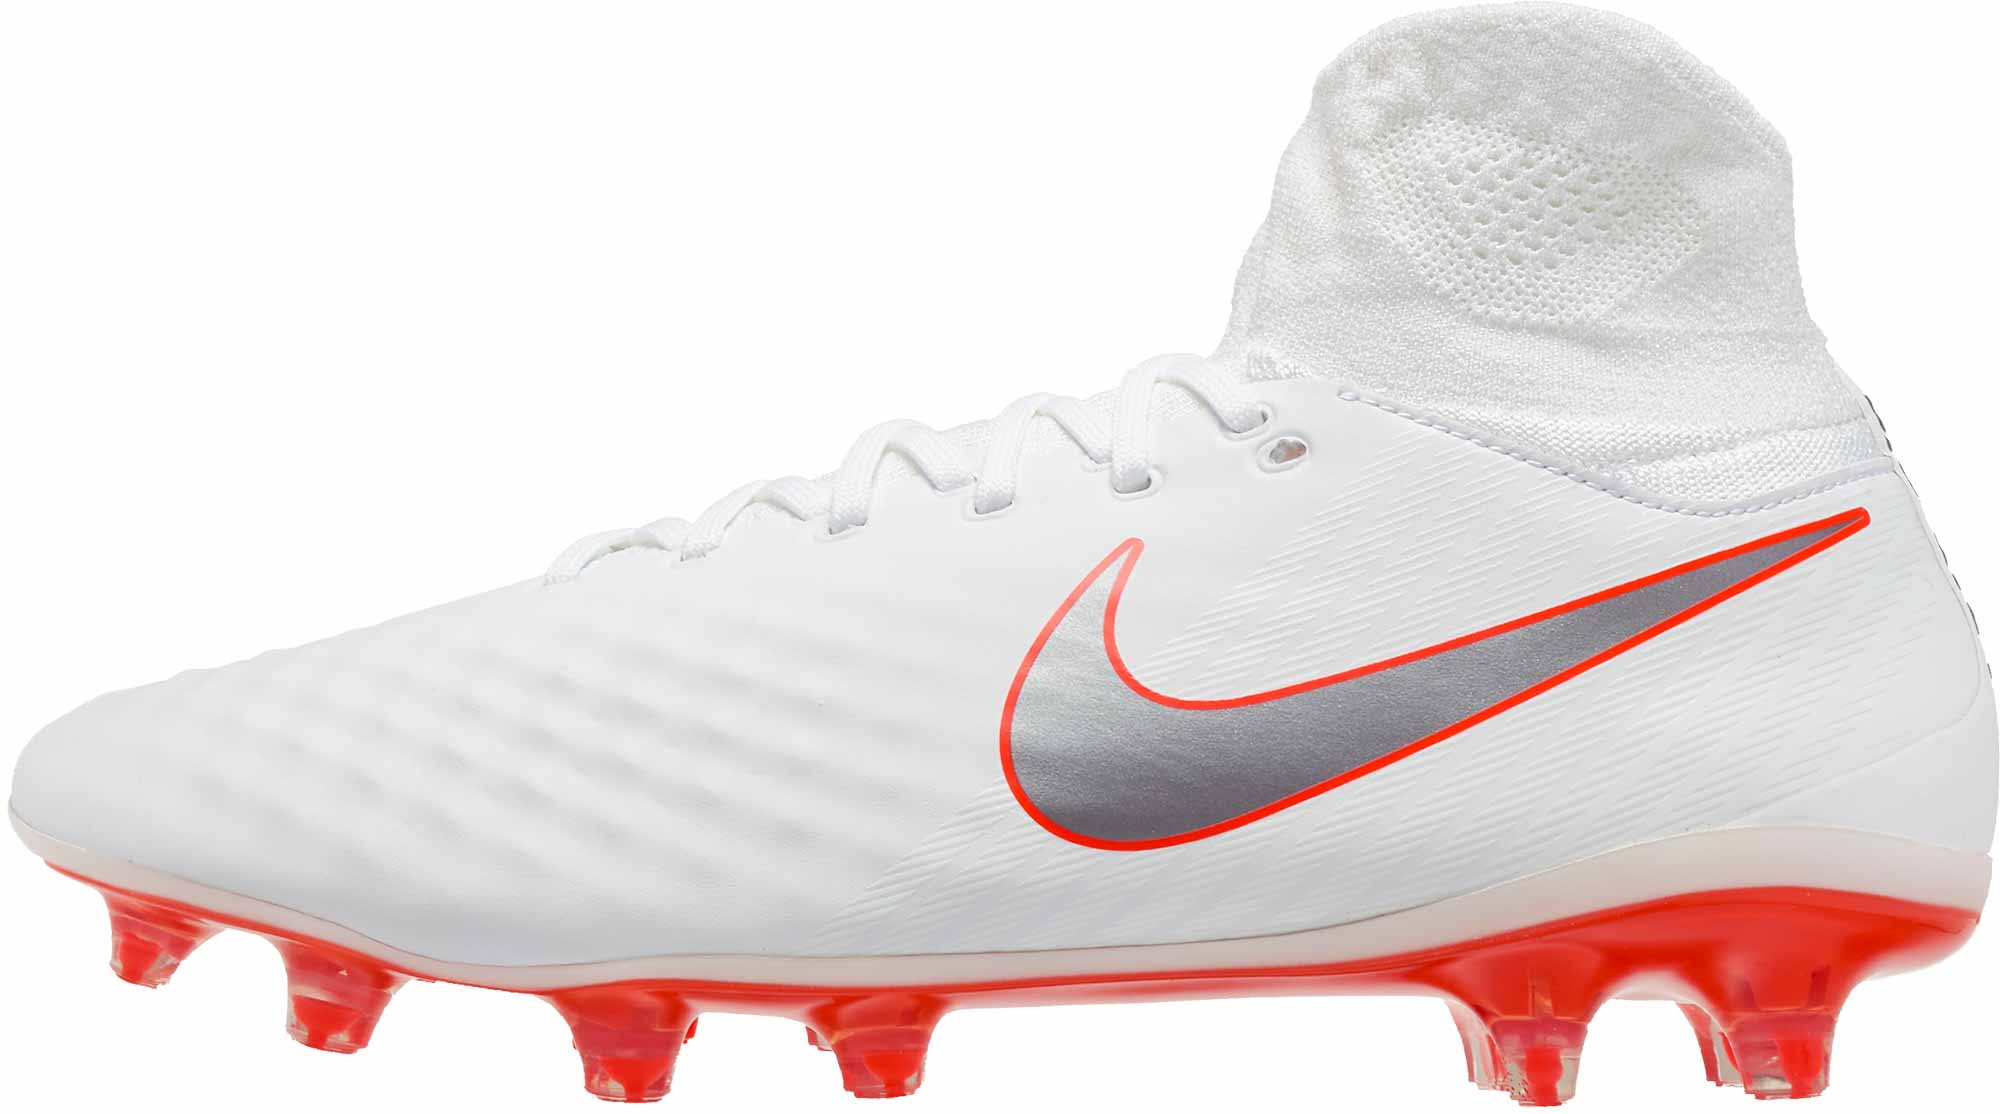 Cheap Nike Magista Obra II FG Soccer Cleats for $99.99